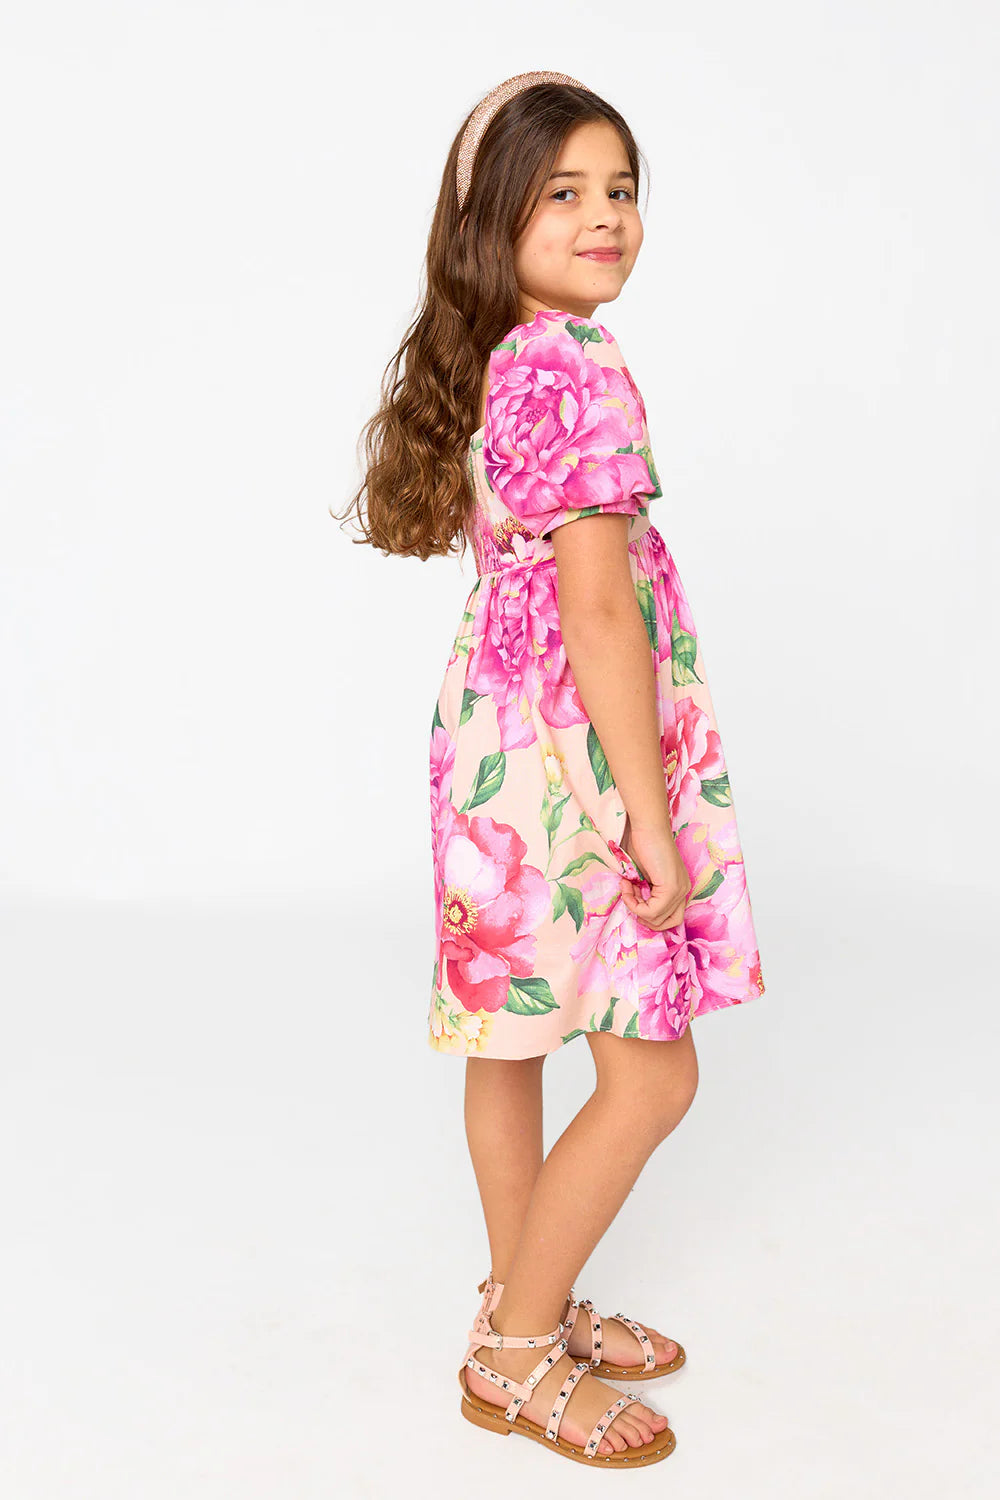 Kennedy Explorer Girl's Babydoll Dress